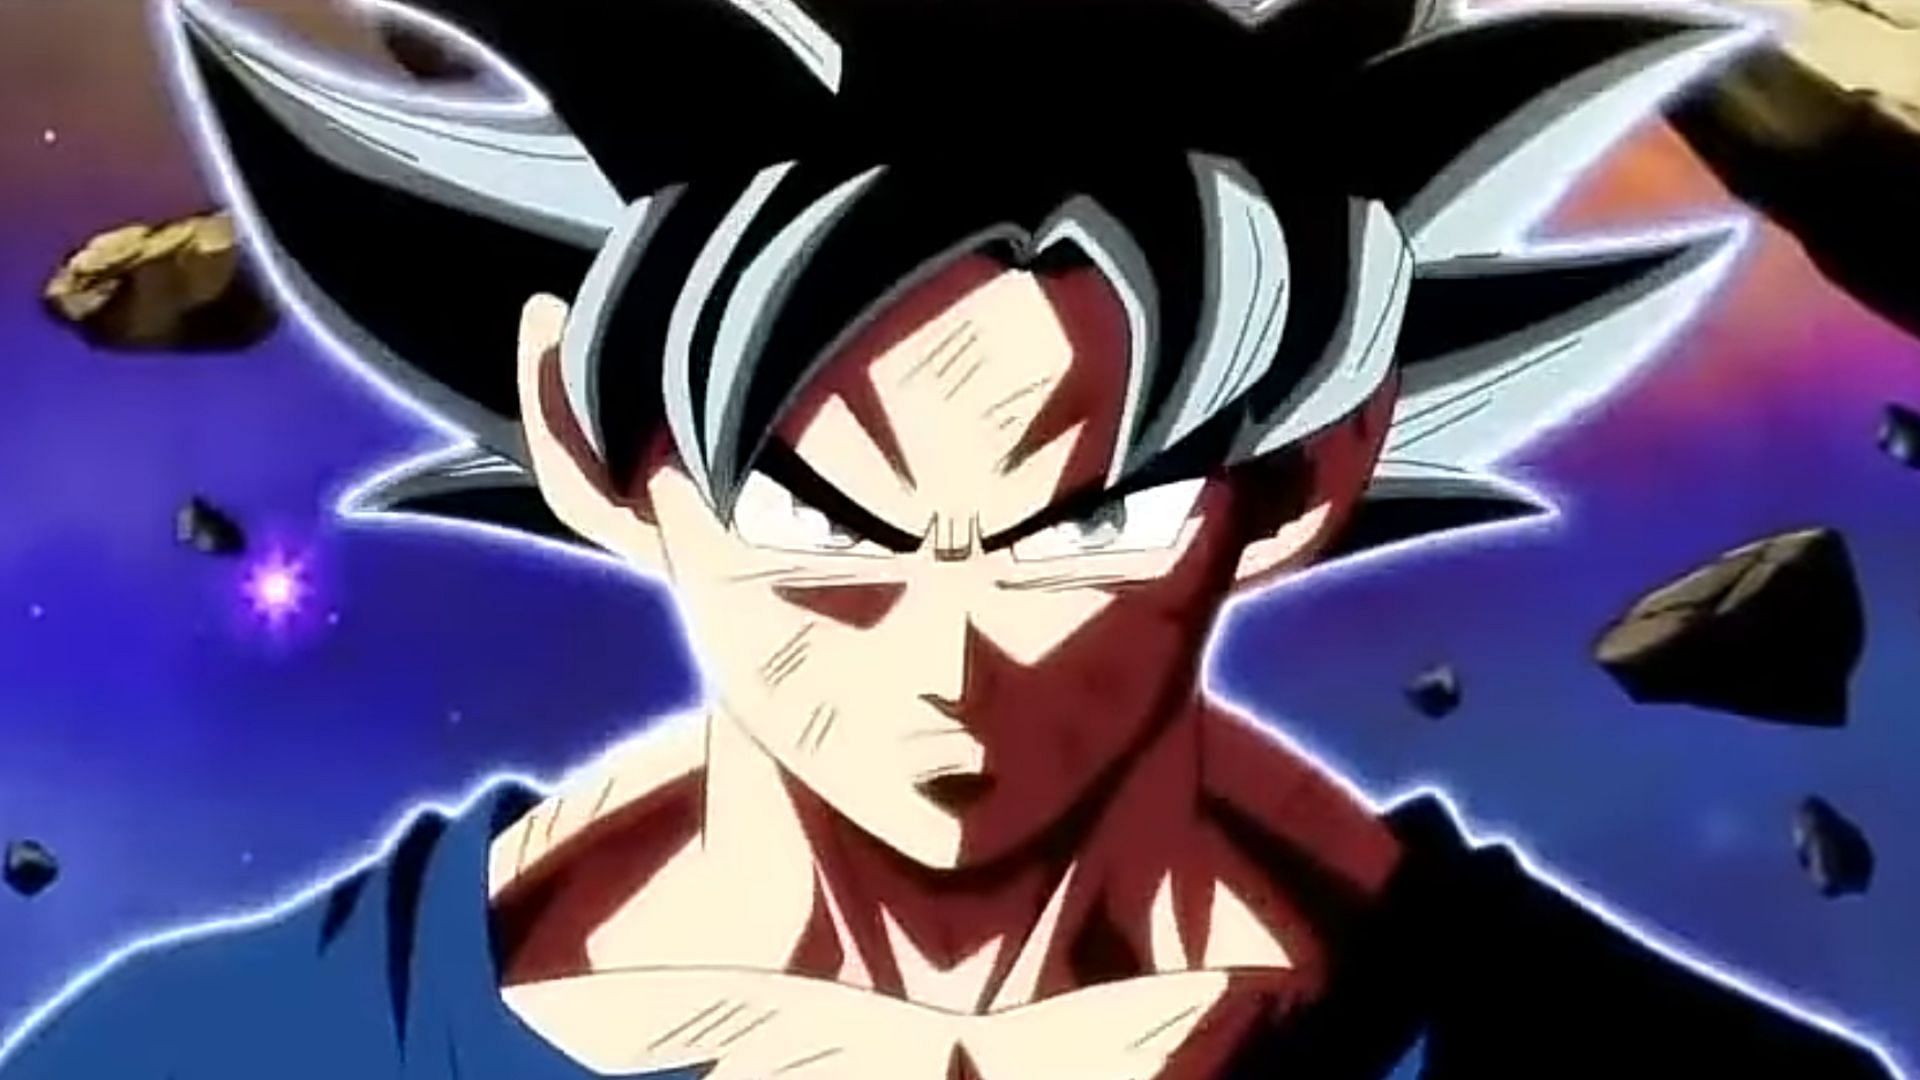 Ultra Instinct Goku as seen in the anime (Image via Toei Animation)